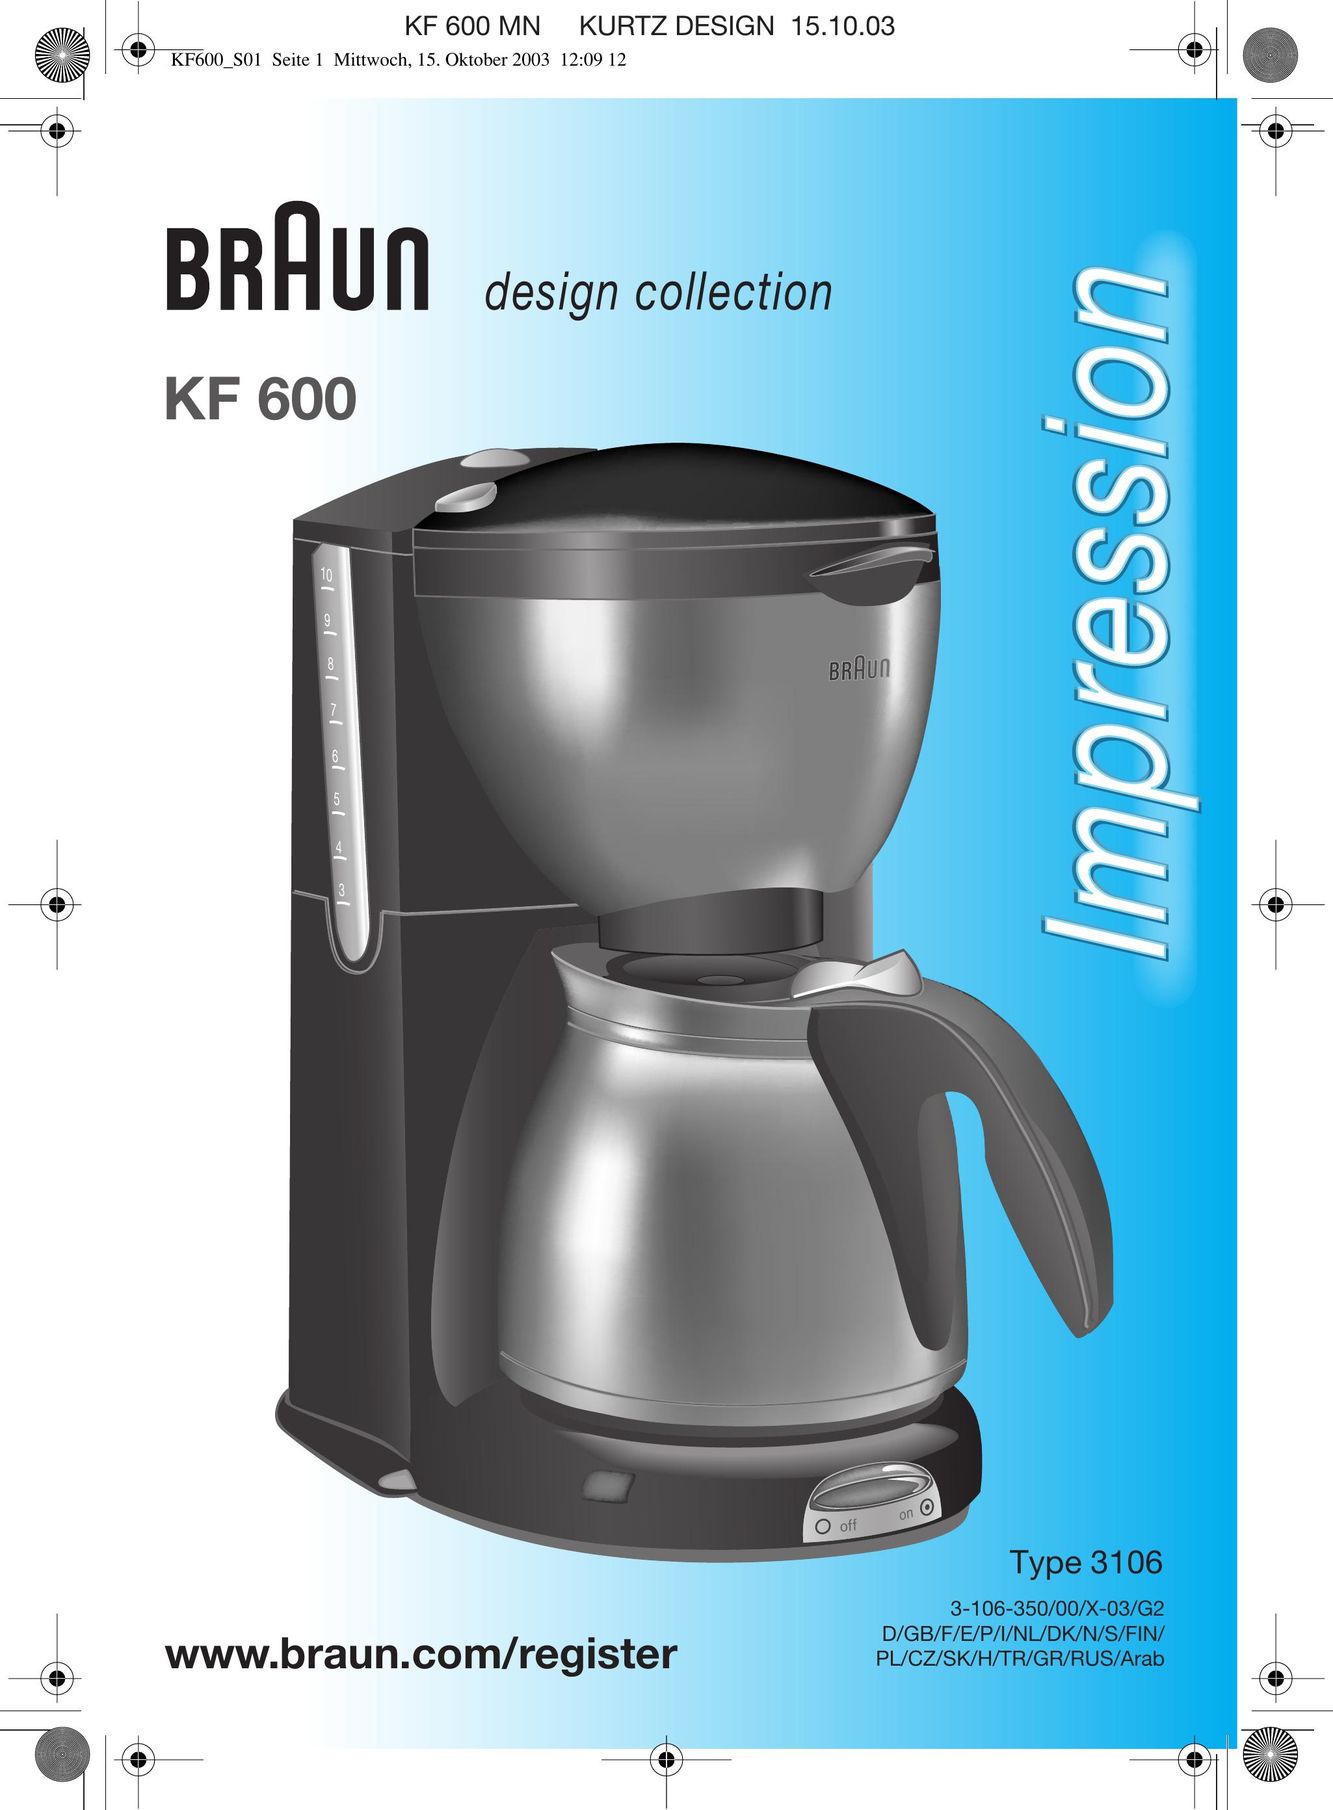 Braun KF 600 Coffeemaker User Manual